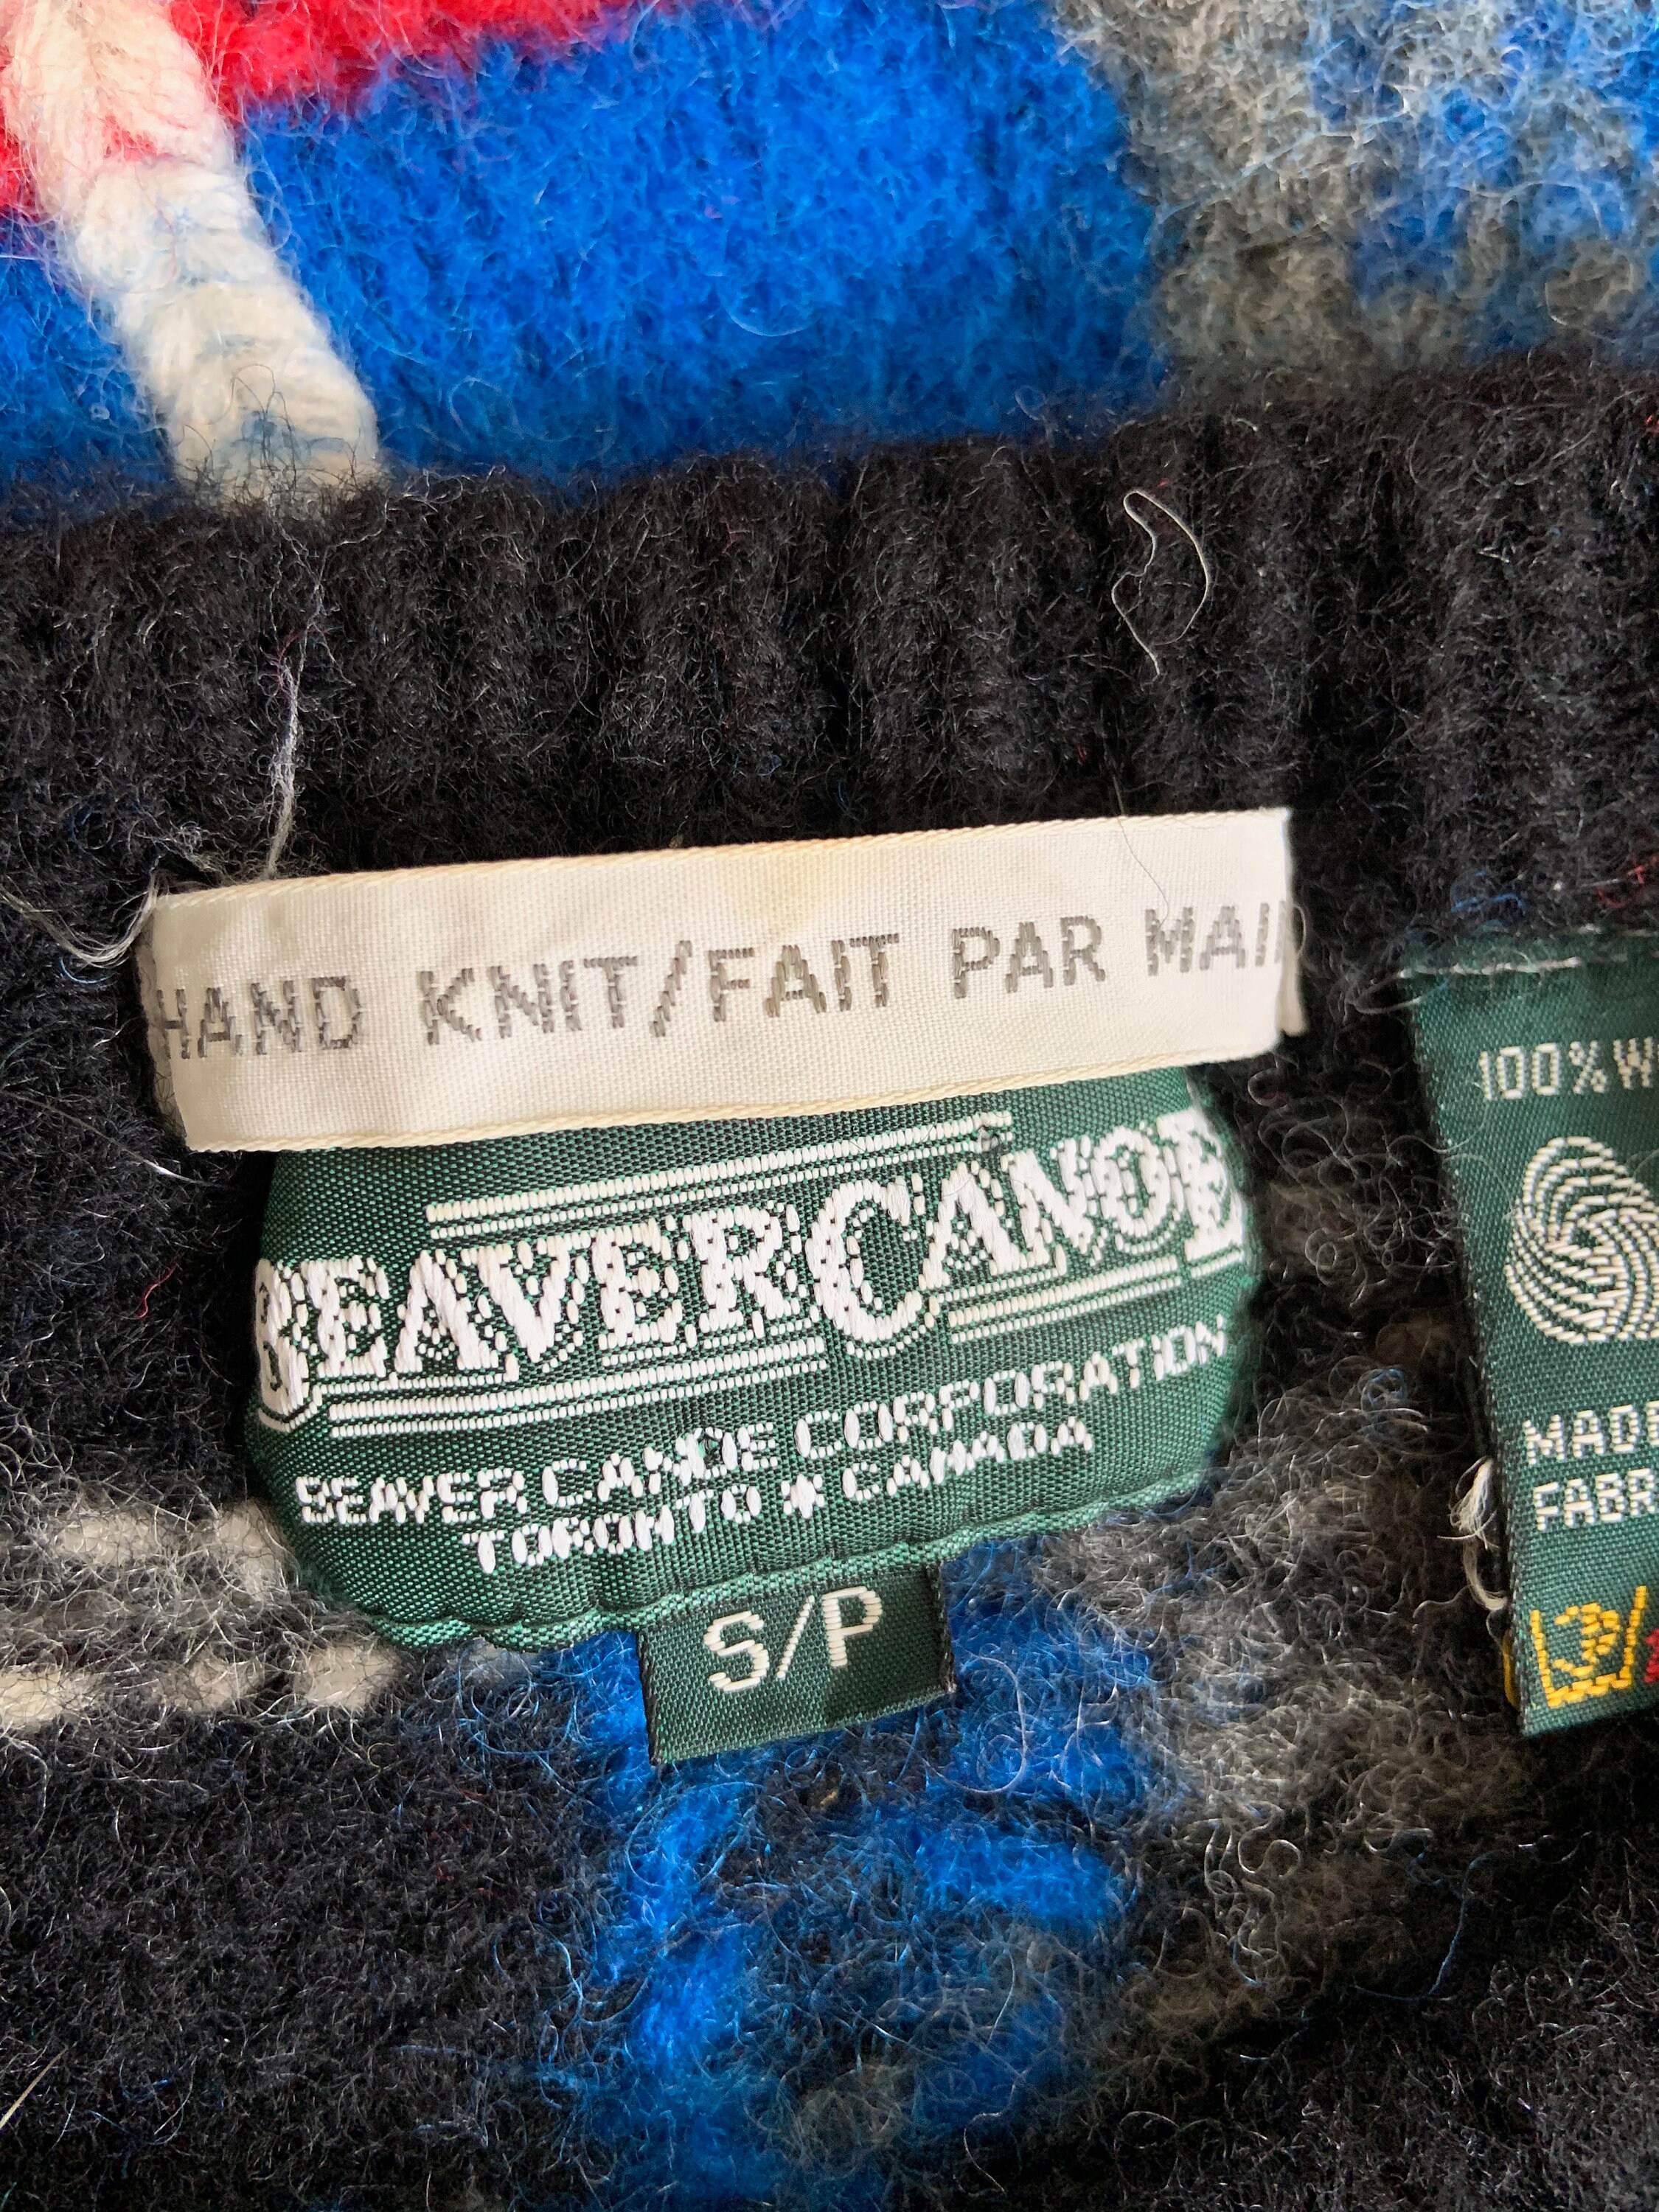 CHUNKY PLAID SWEATER: Beaver Canoe Vintage Wool Sweater | Etsy